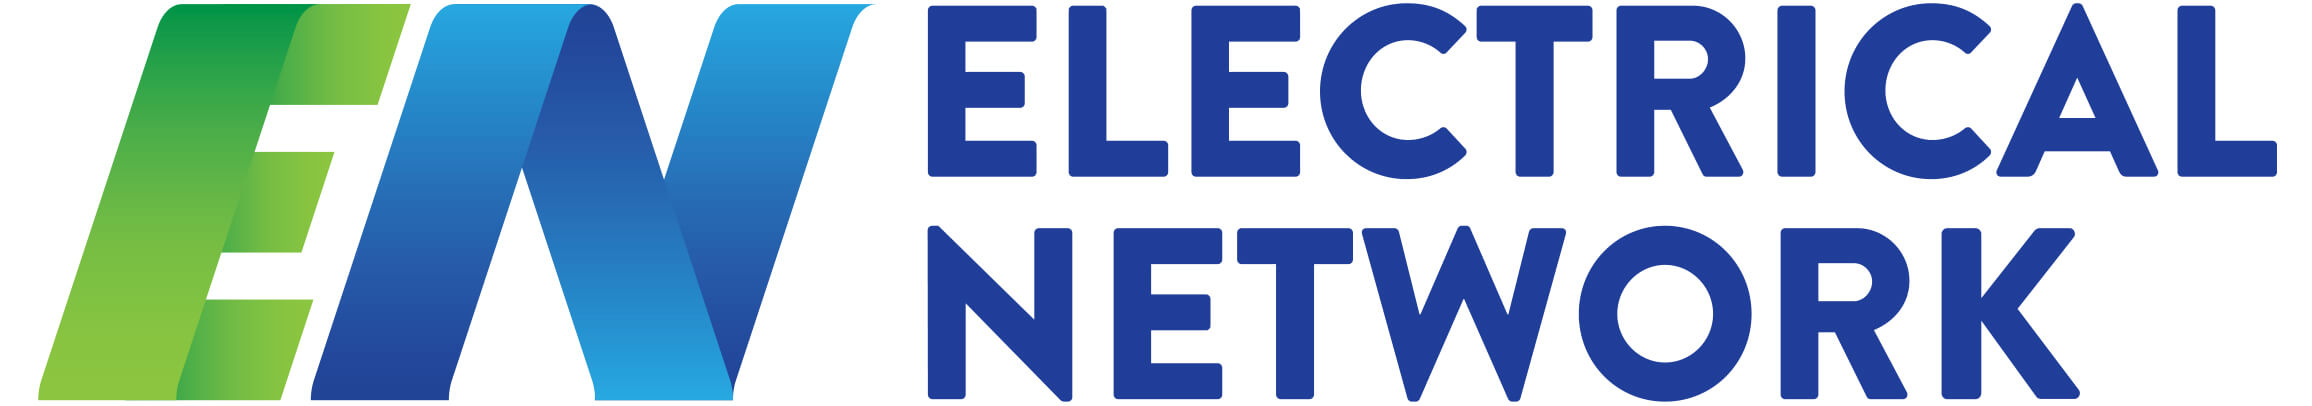 Electrical Network logo